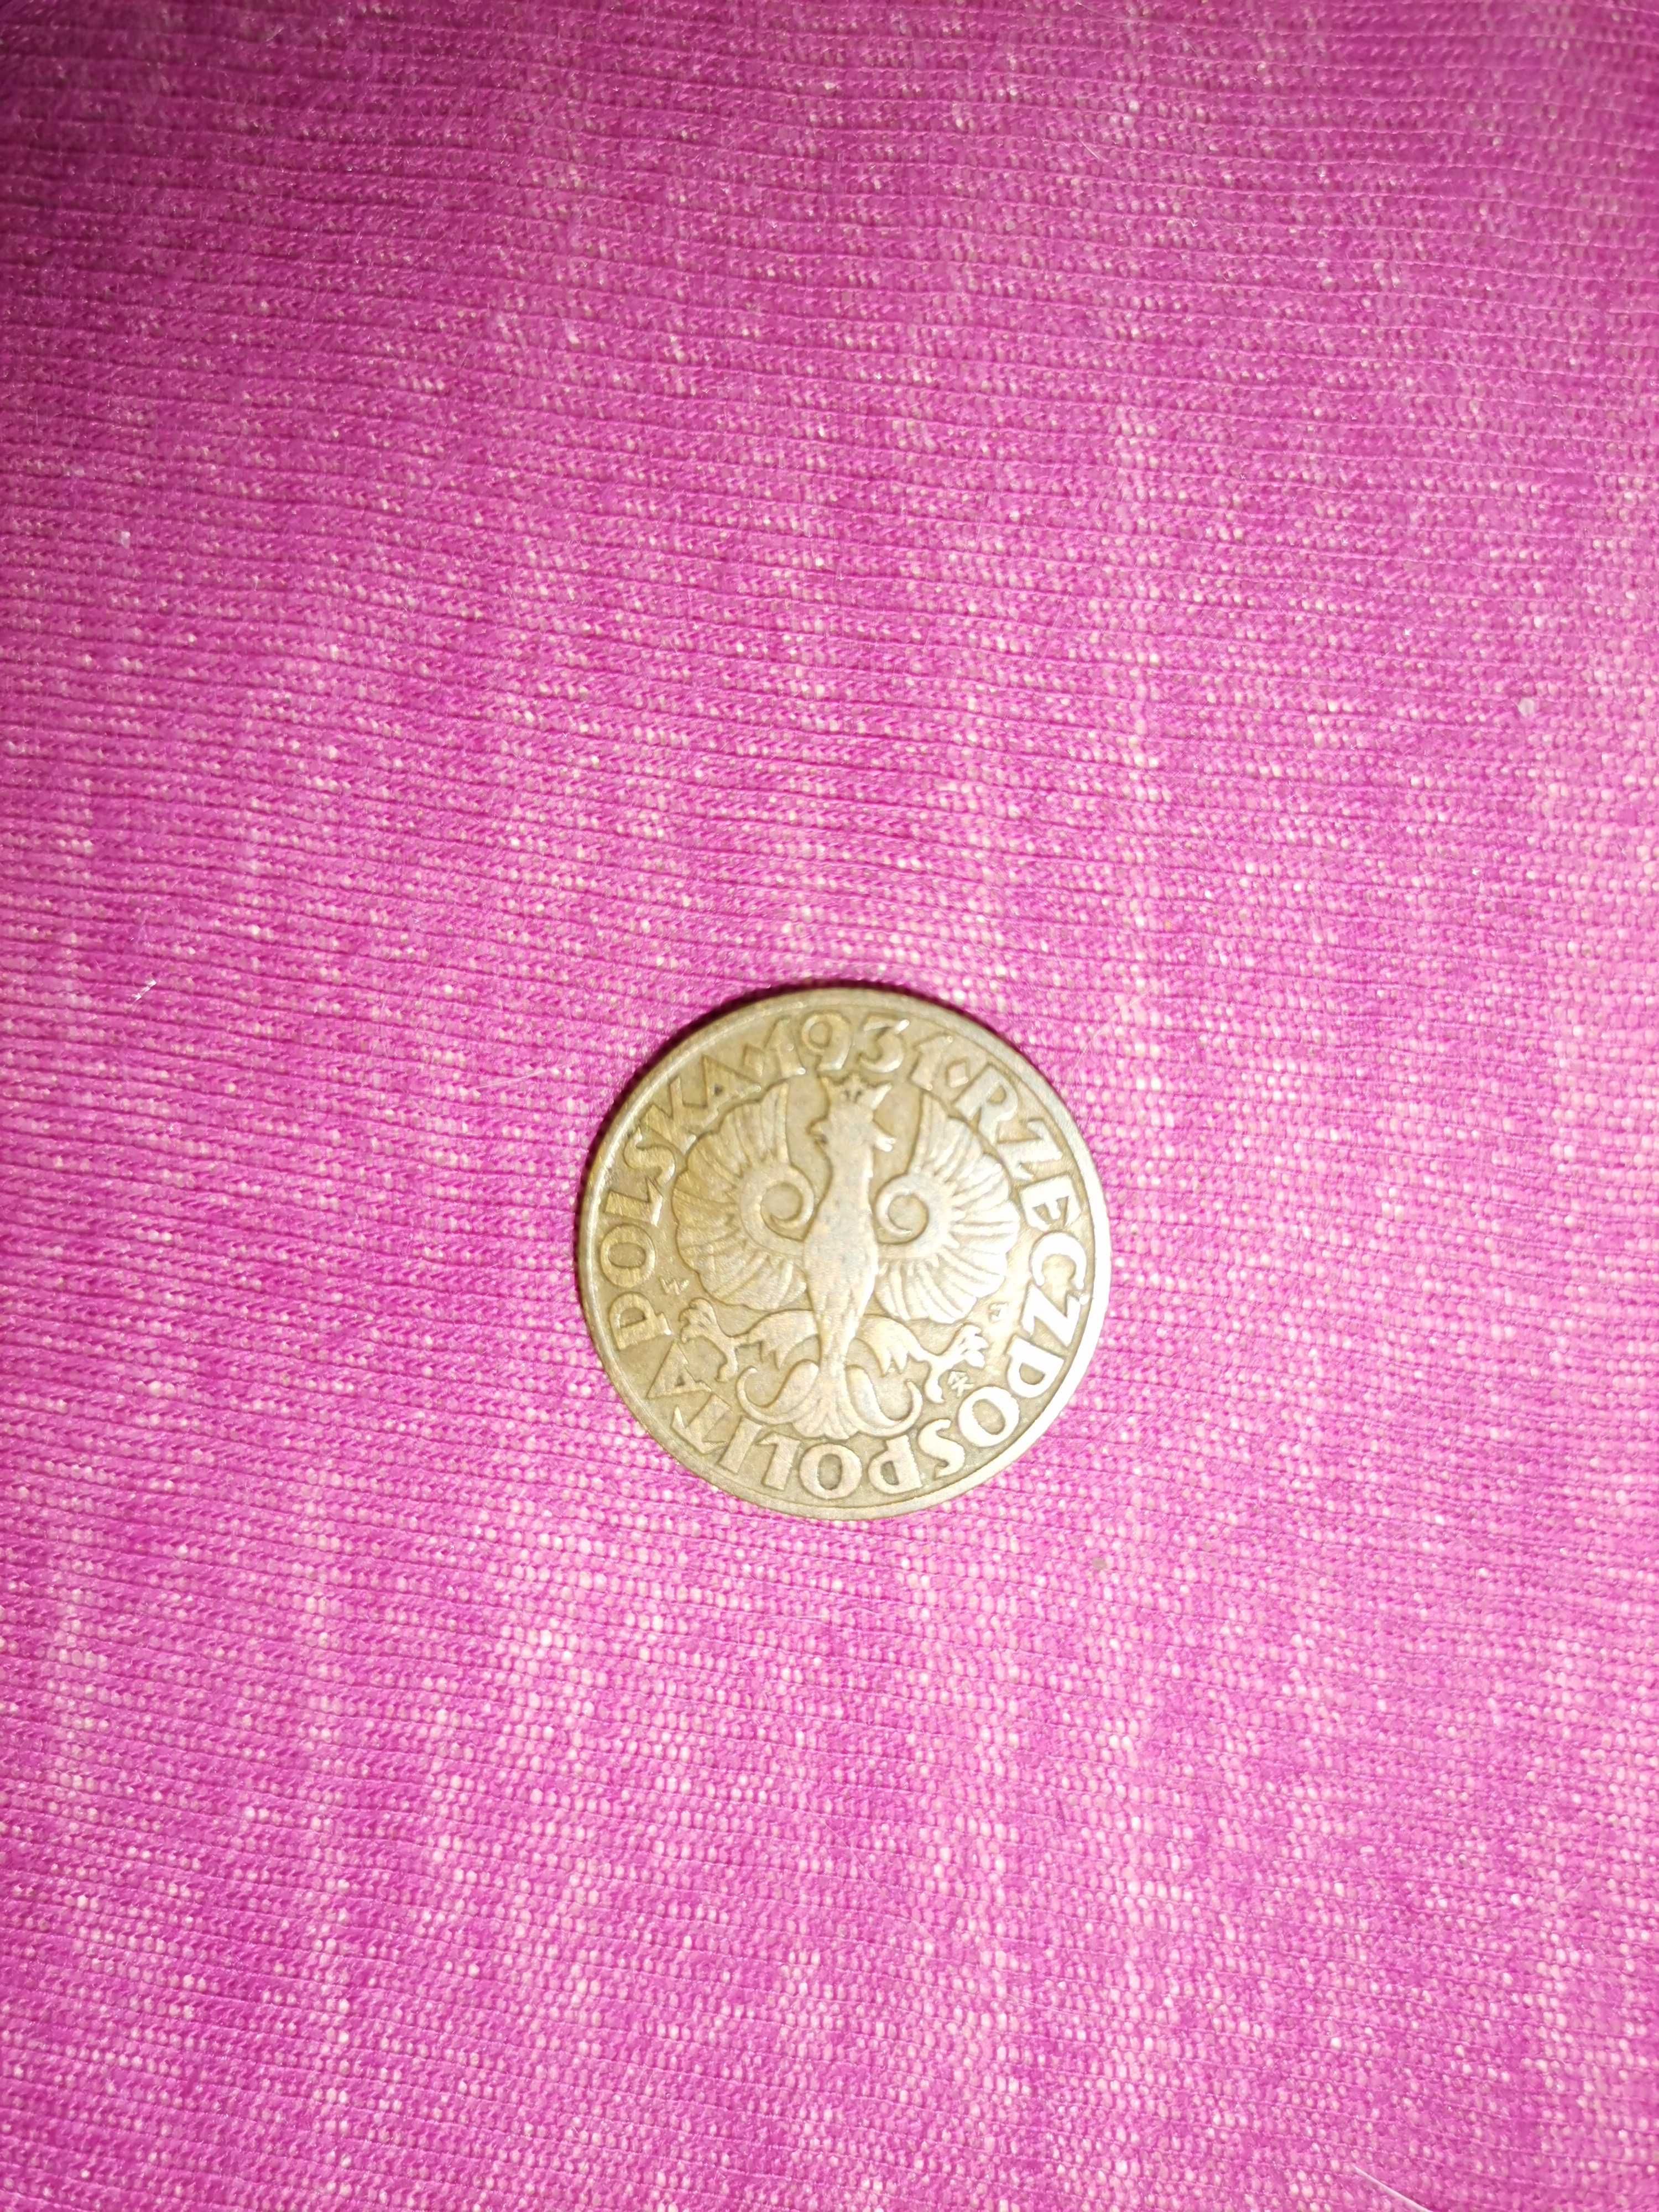 Moneta 5 groszy 1931 rok II RP